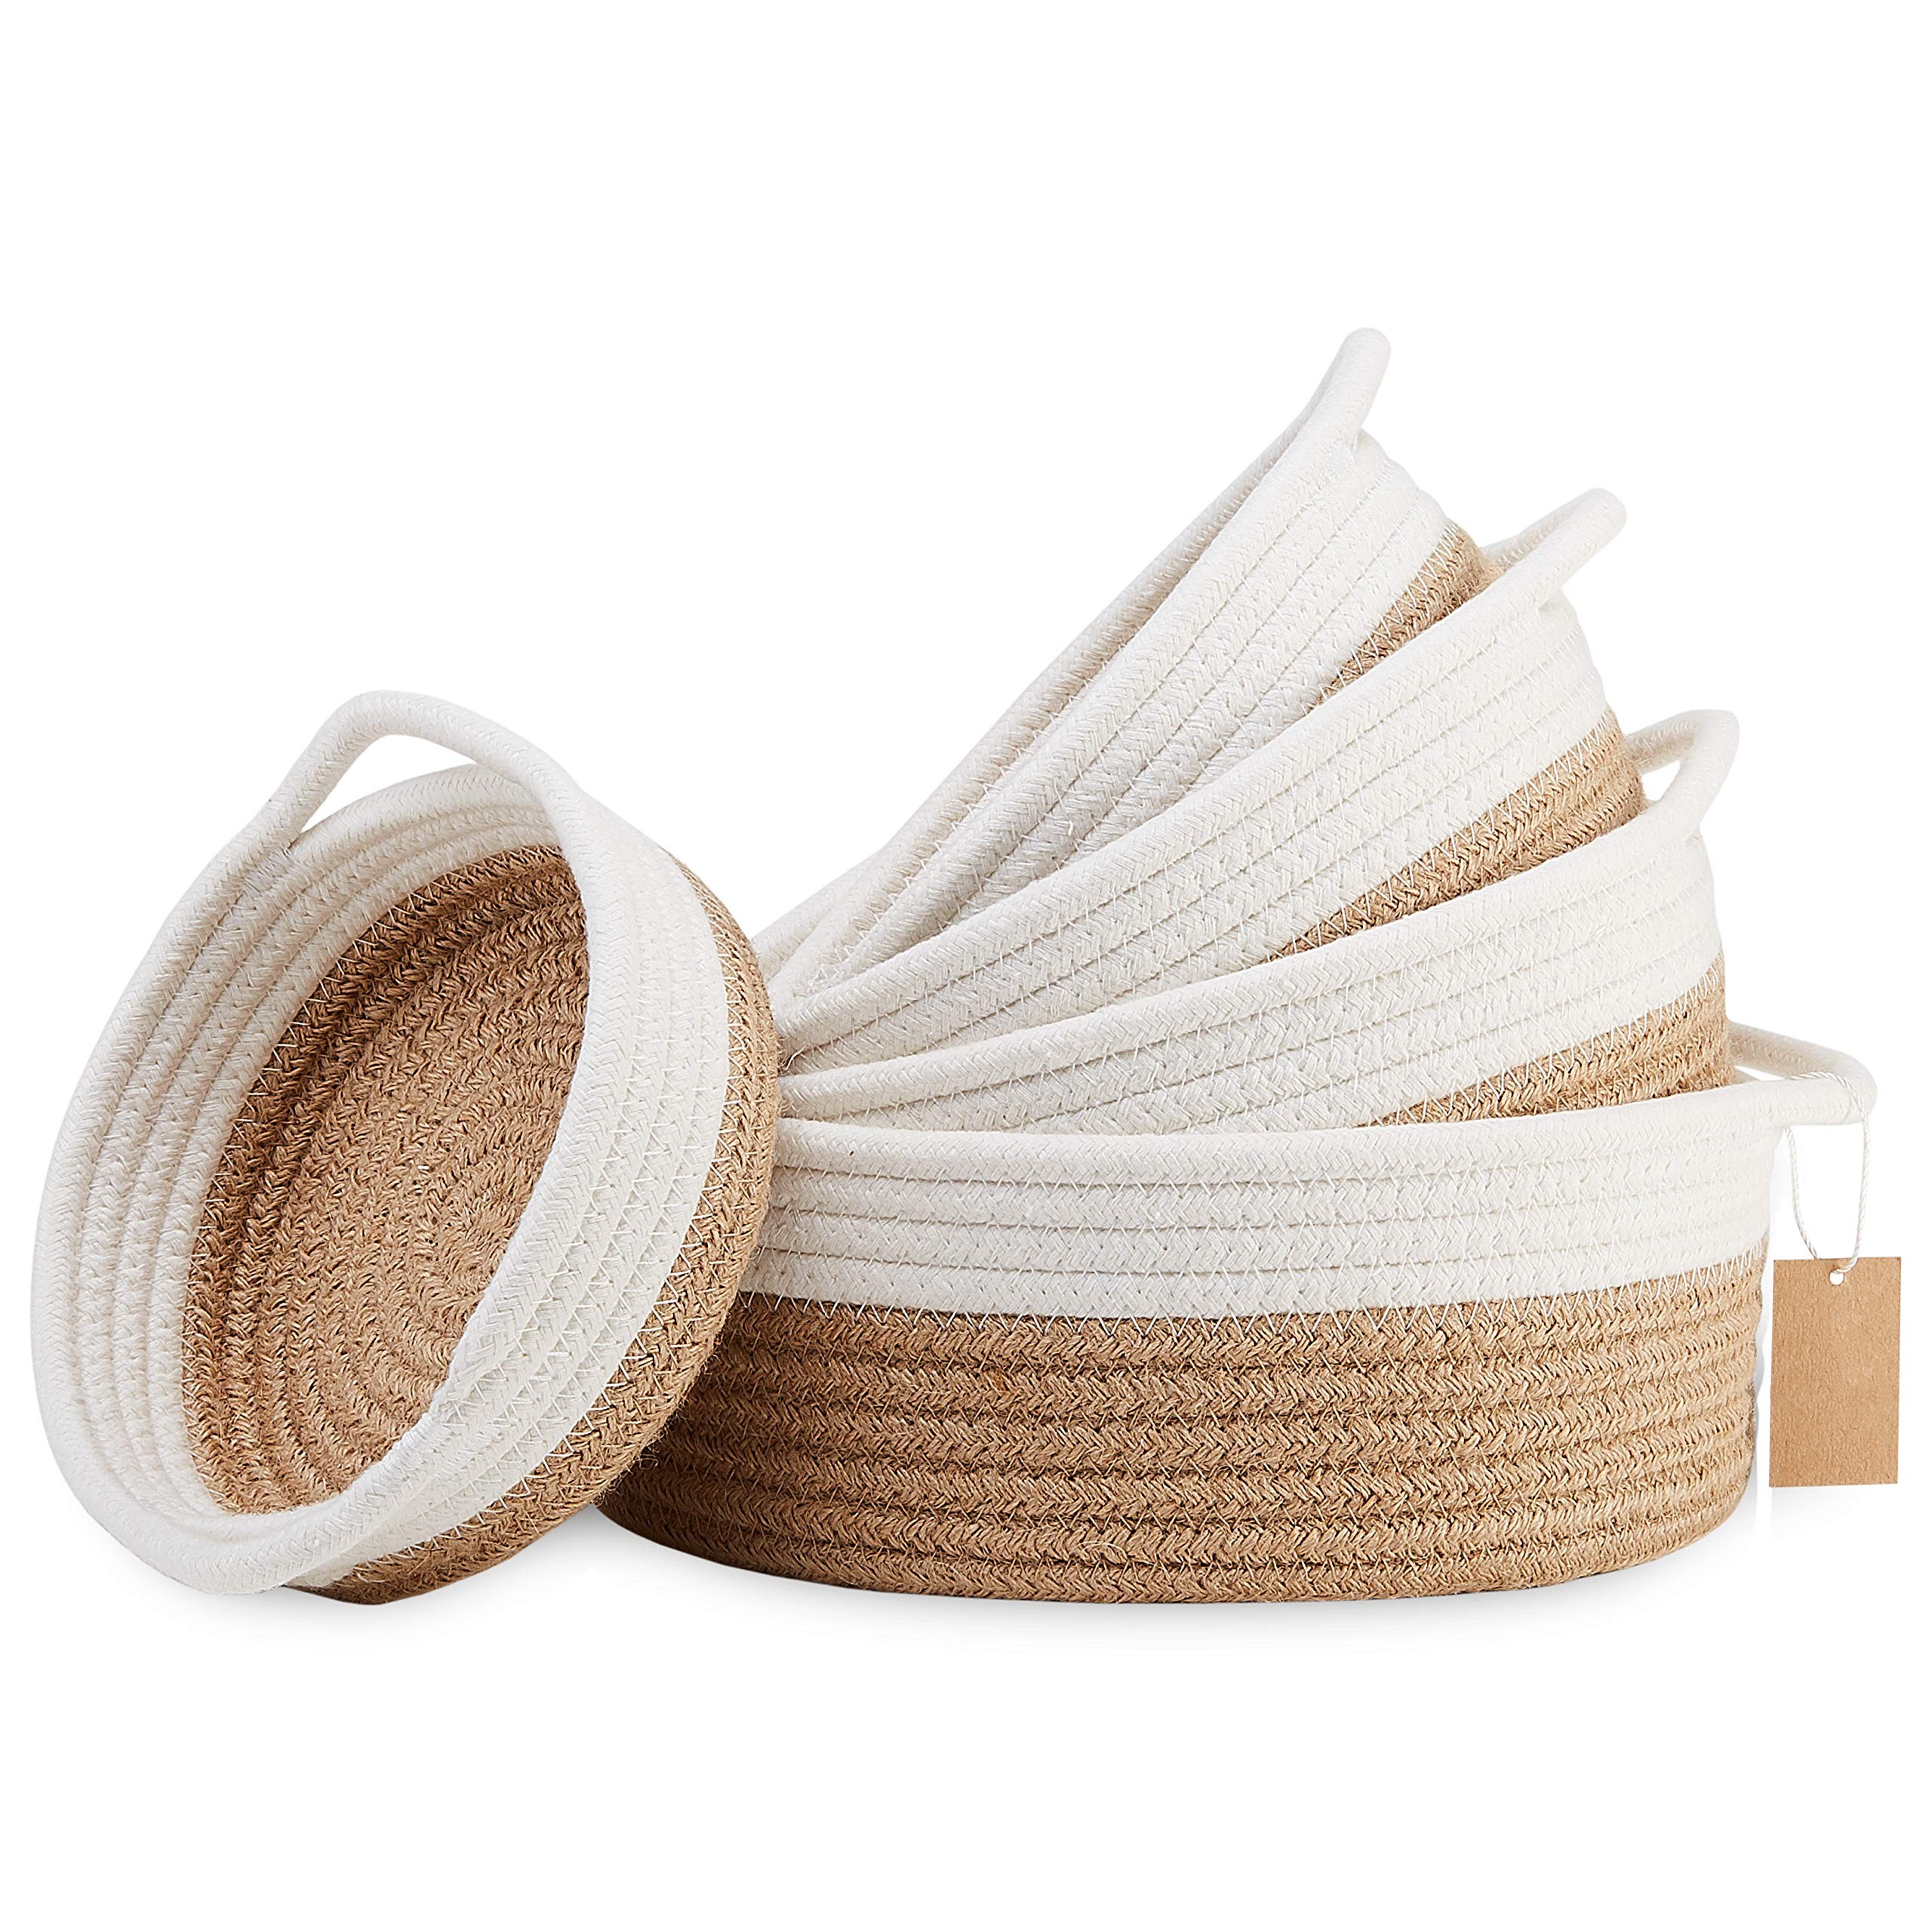 Rûne Lytse Woven Baskets Set 100% Natuerlike Cotton Rope Home Decor